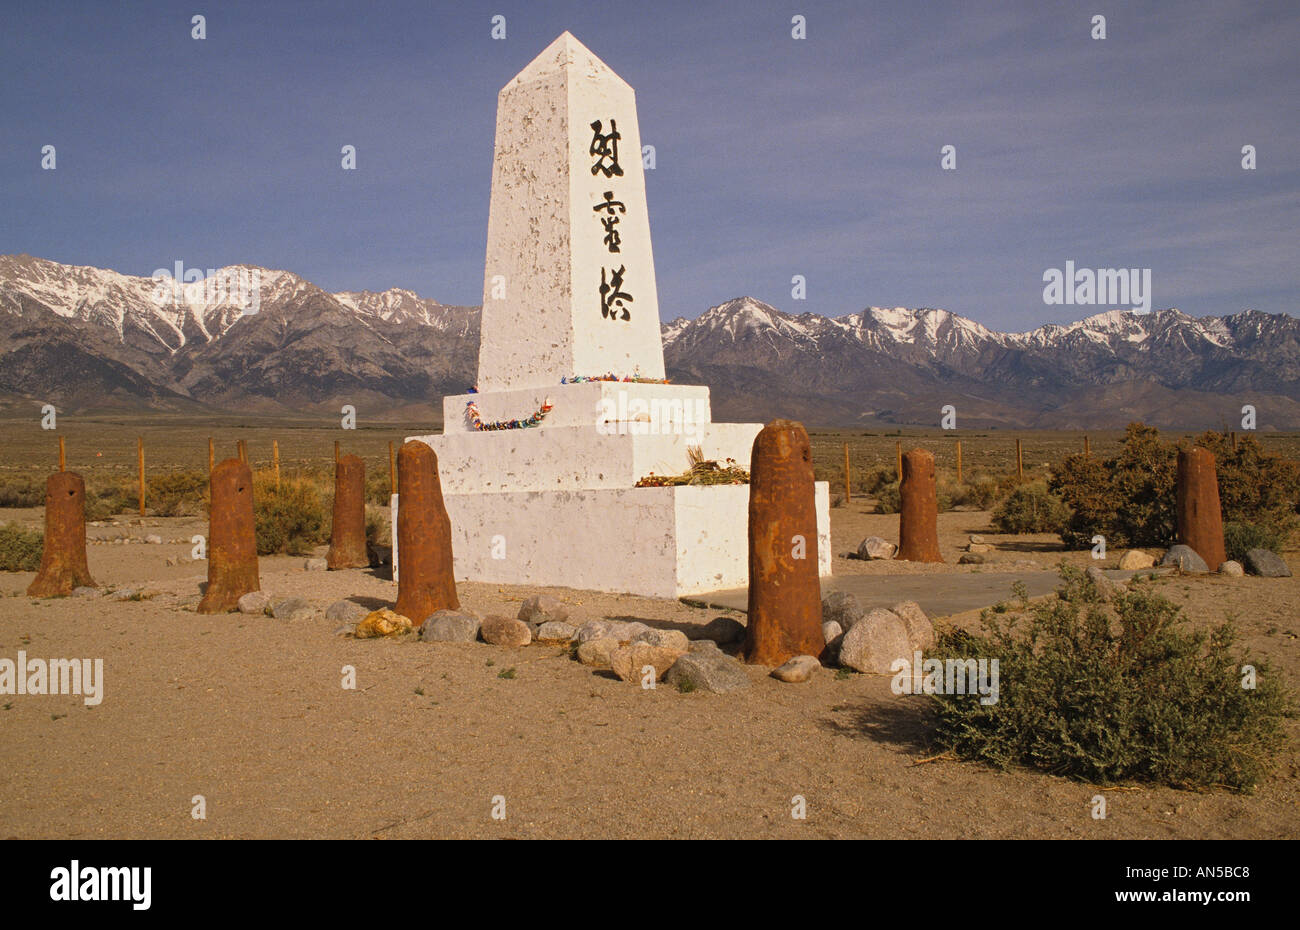 California Owens Valley Manzanar WW II Japanese American internment camp cemetery memorial Sierra Nevada mountains Stock Photo